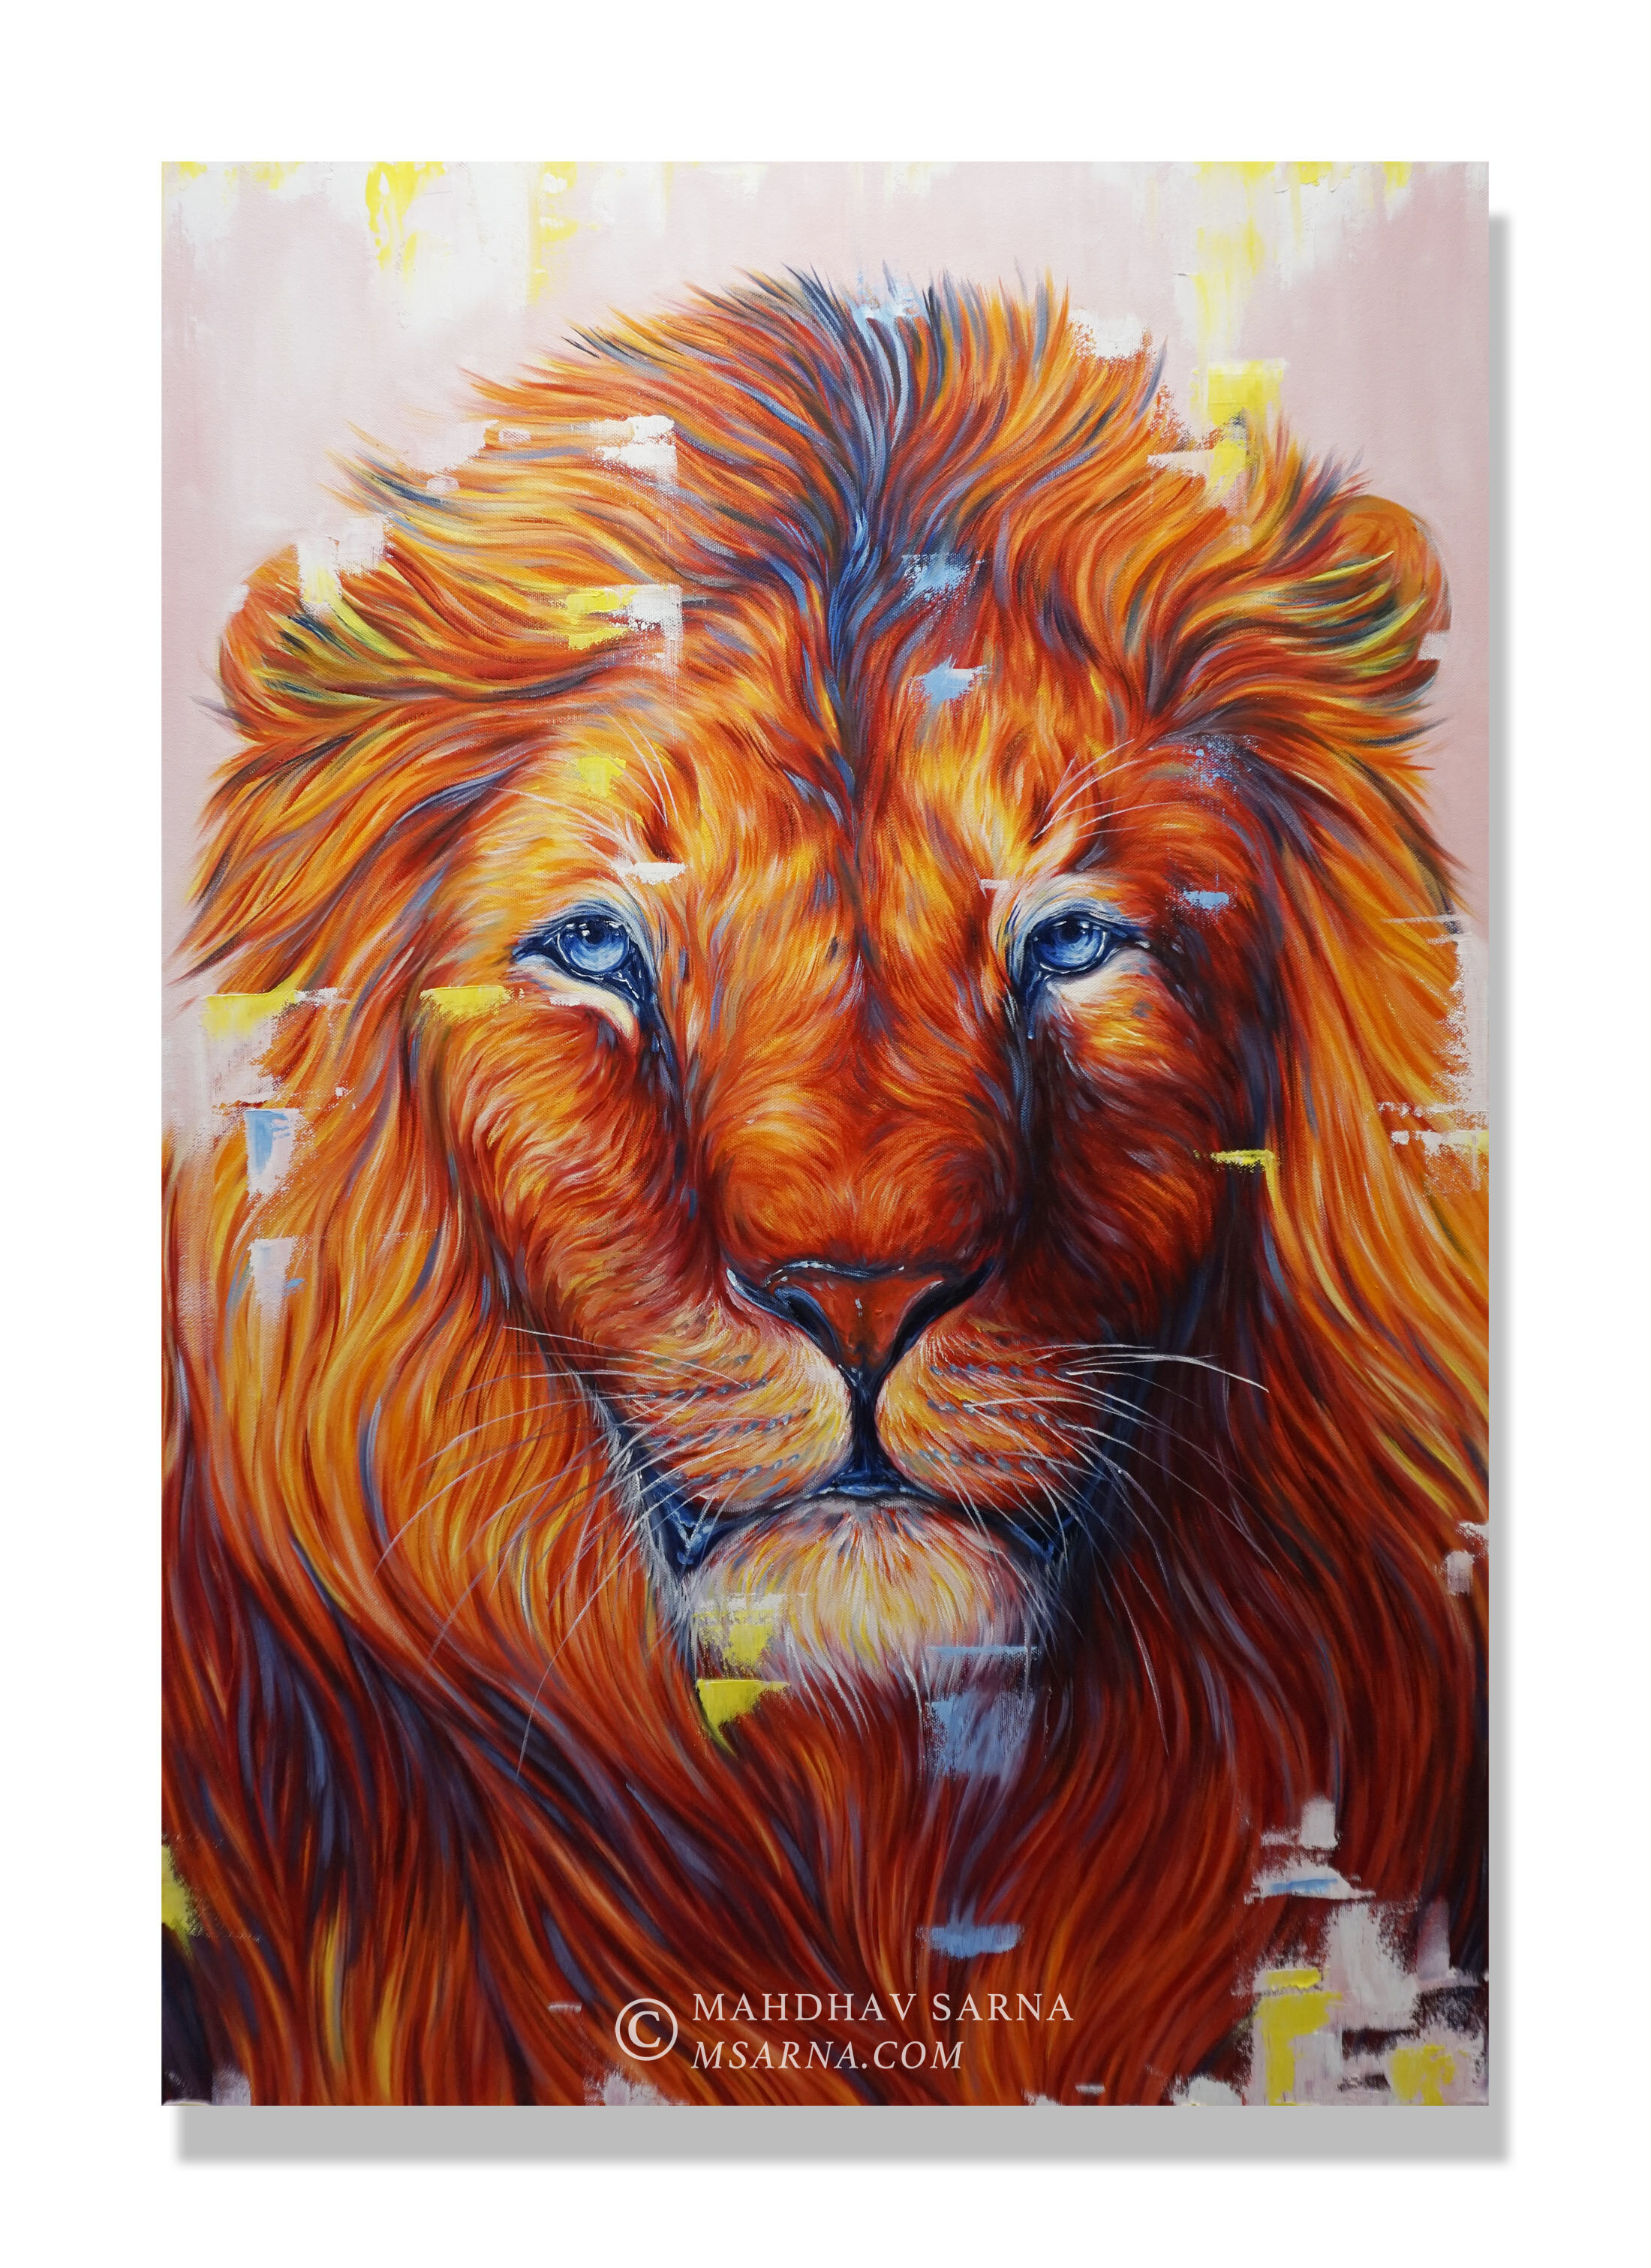 male lion oil painting mspg wildlife art mahdhav sarna.jpg